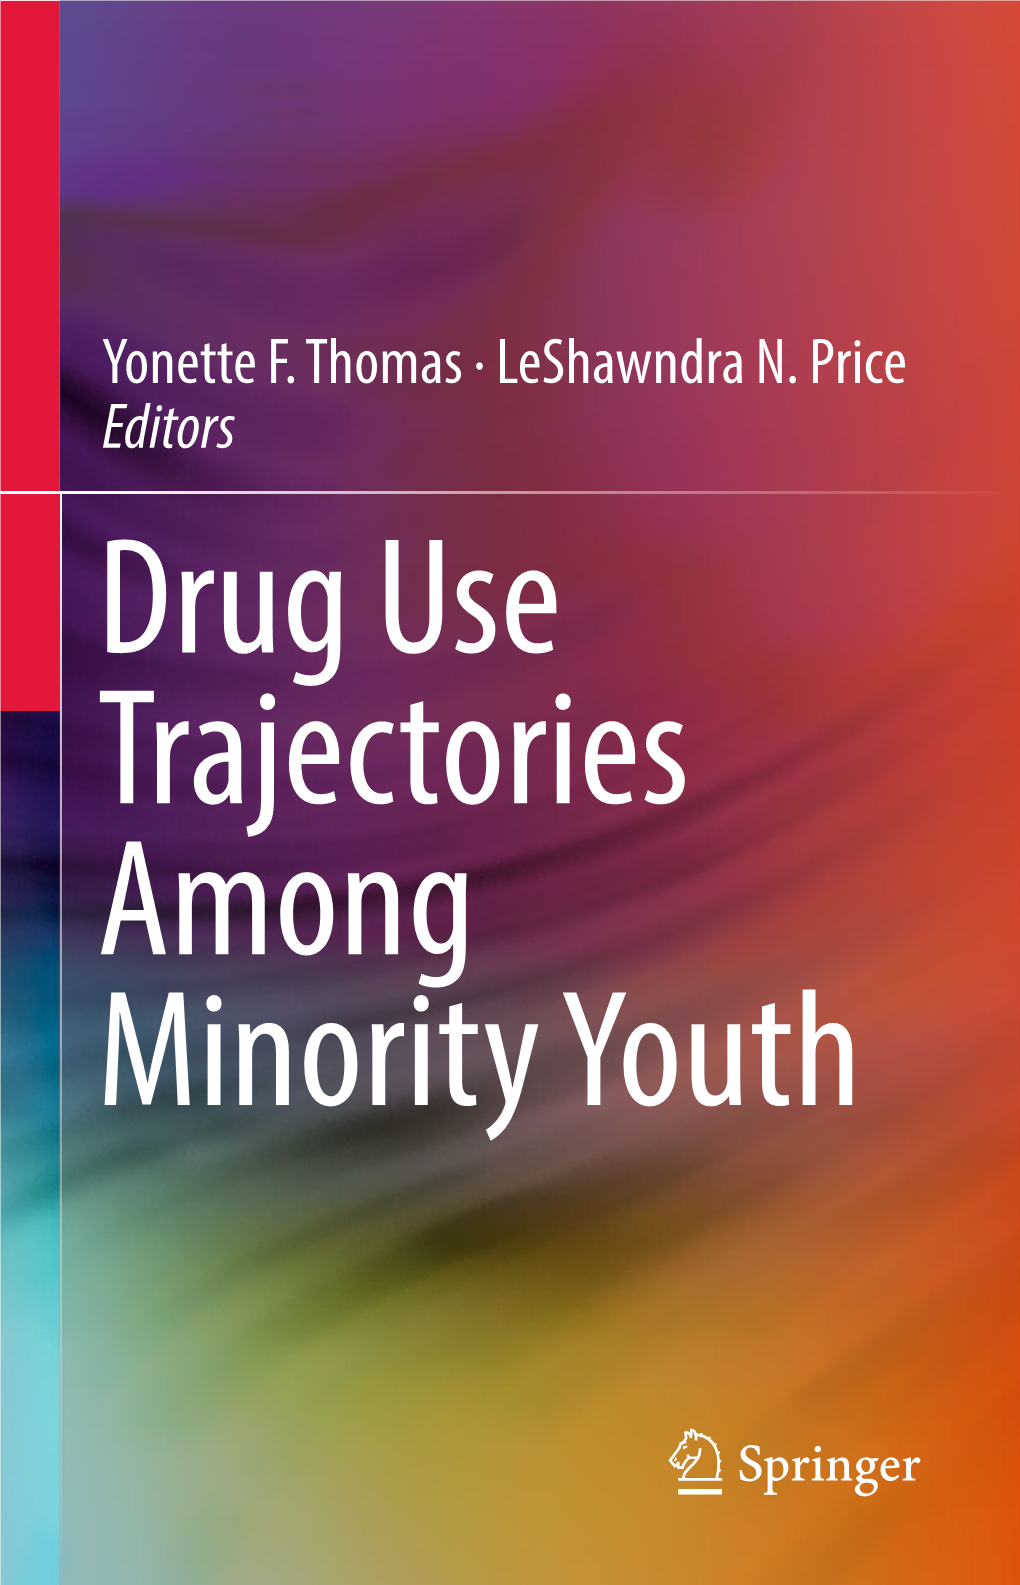 Yonette F. Thomas · Leshawndra N. Price Editors Drug Use Trajectories Among Minority Youth Drug Use Trajectories Among Minority Youth